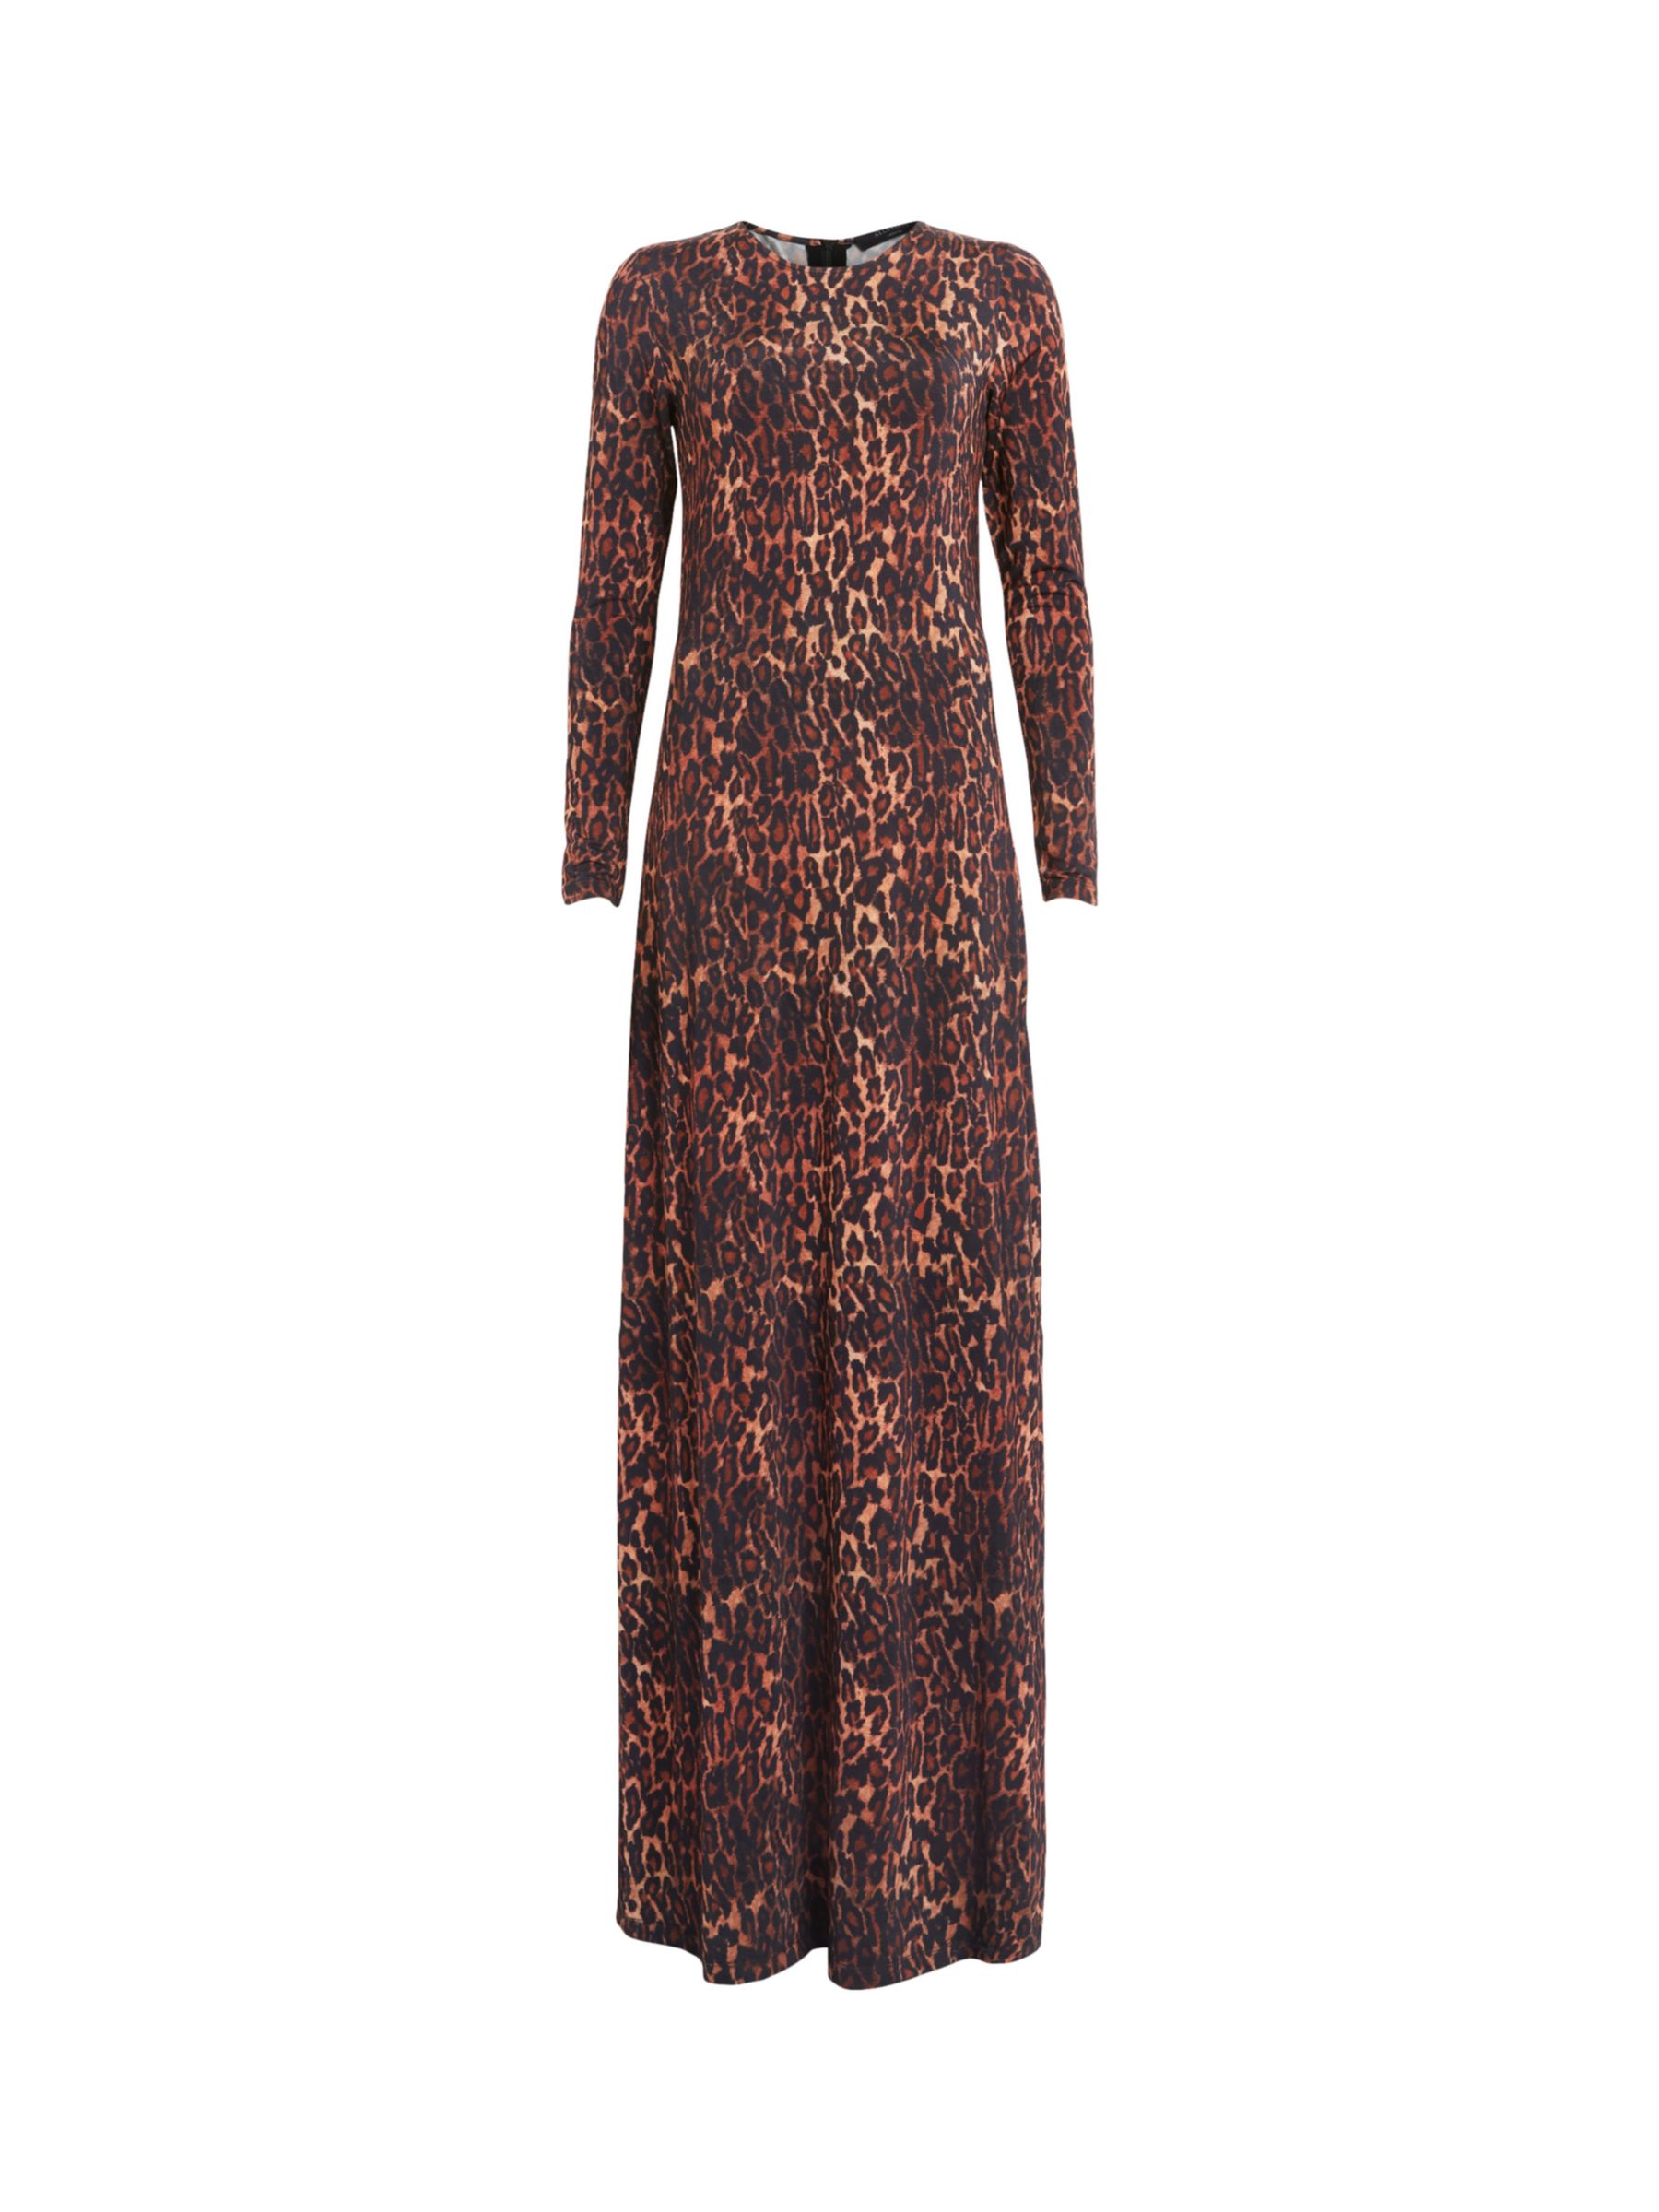 AllSaints Katlyn Anita Maxi Dress, Leopard Print at John Lewis & Partners